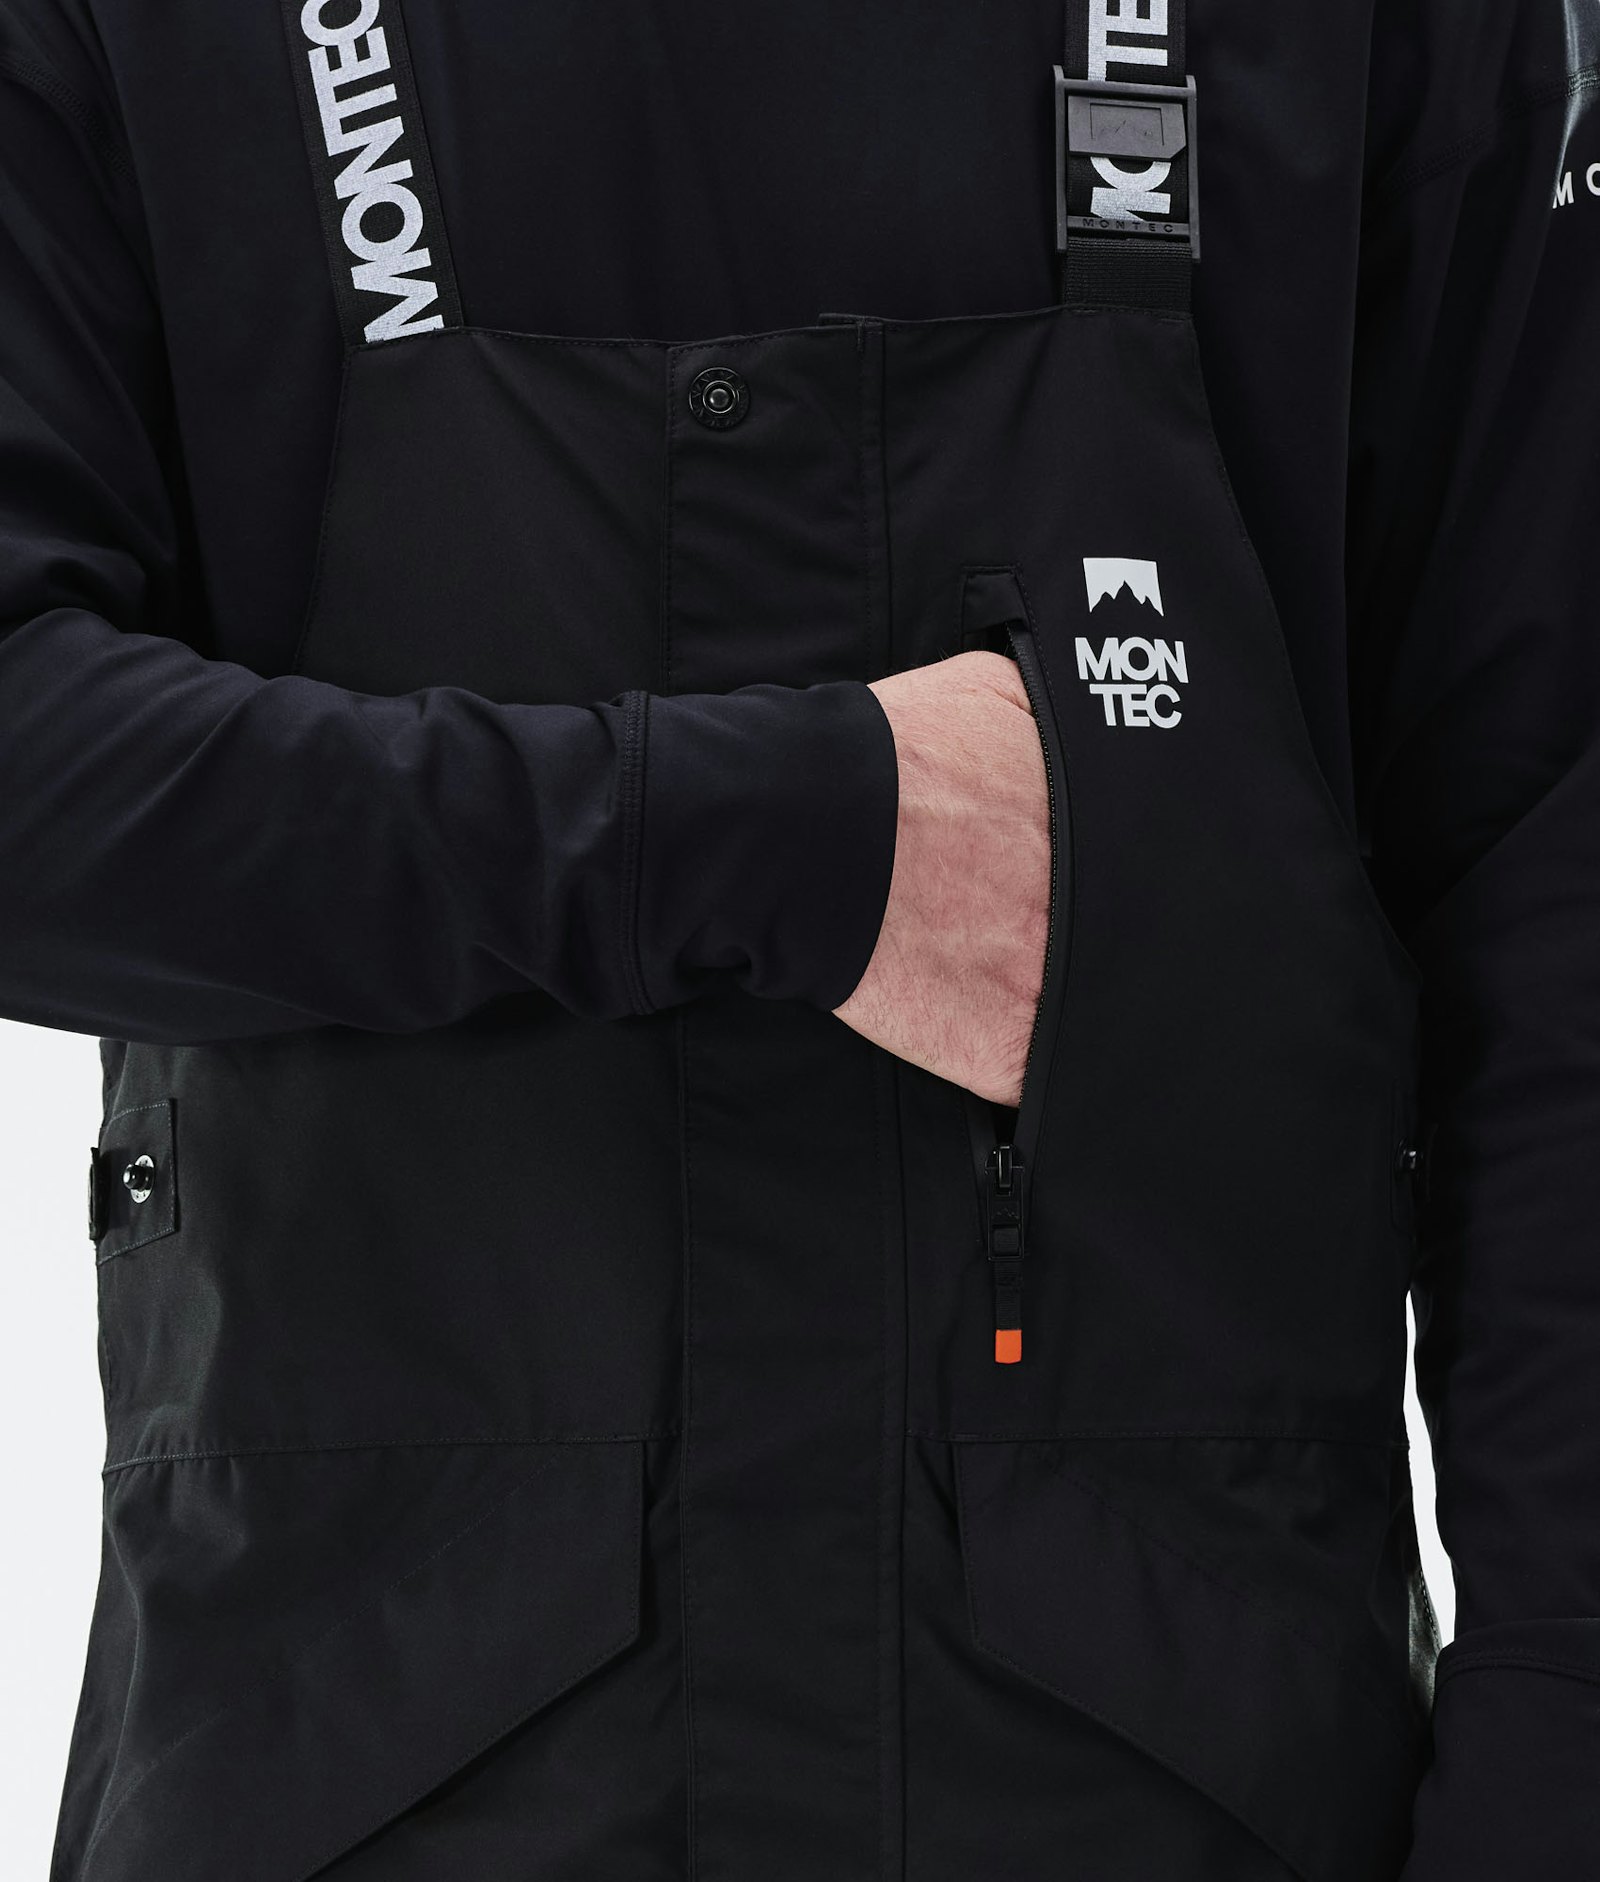 Fawk 2021 Pantalon de Ski Homme Black/Light Grey/Burgundy